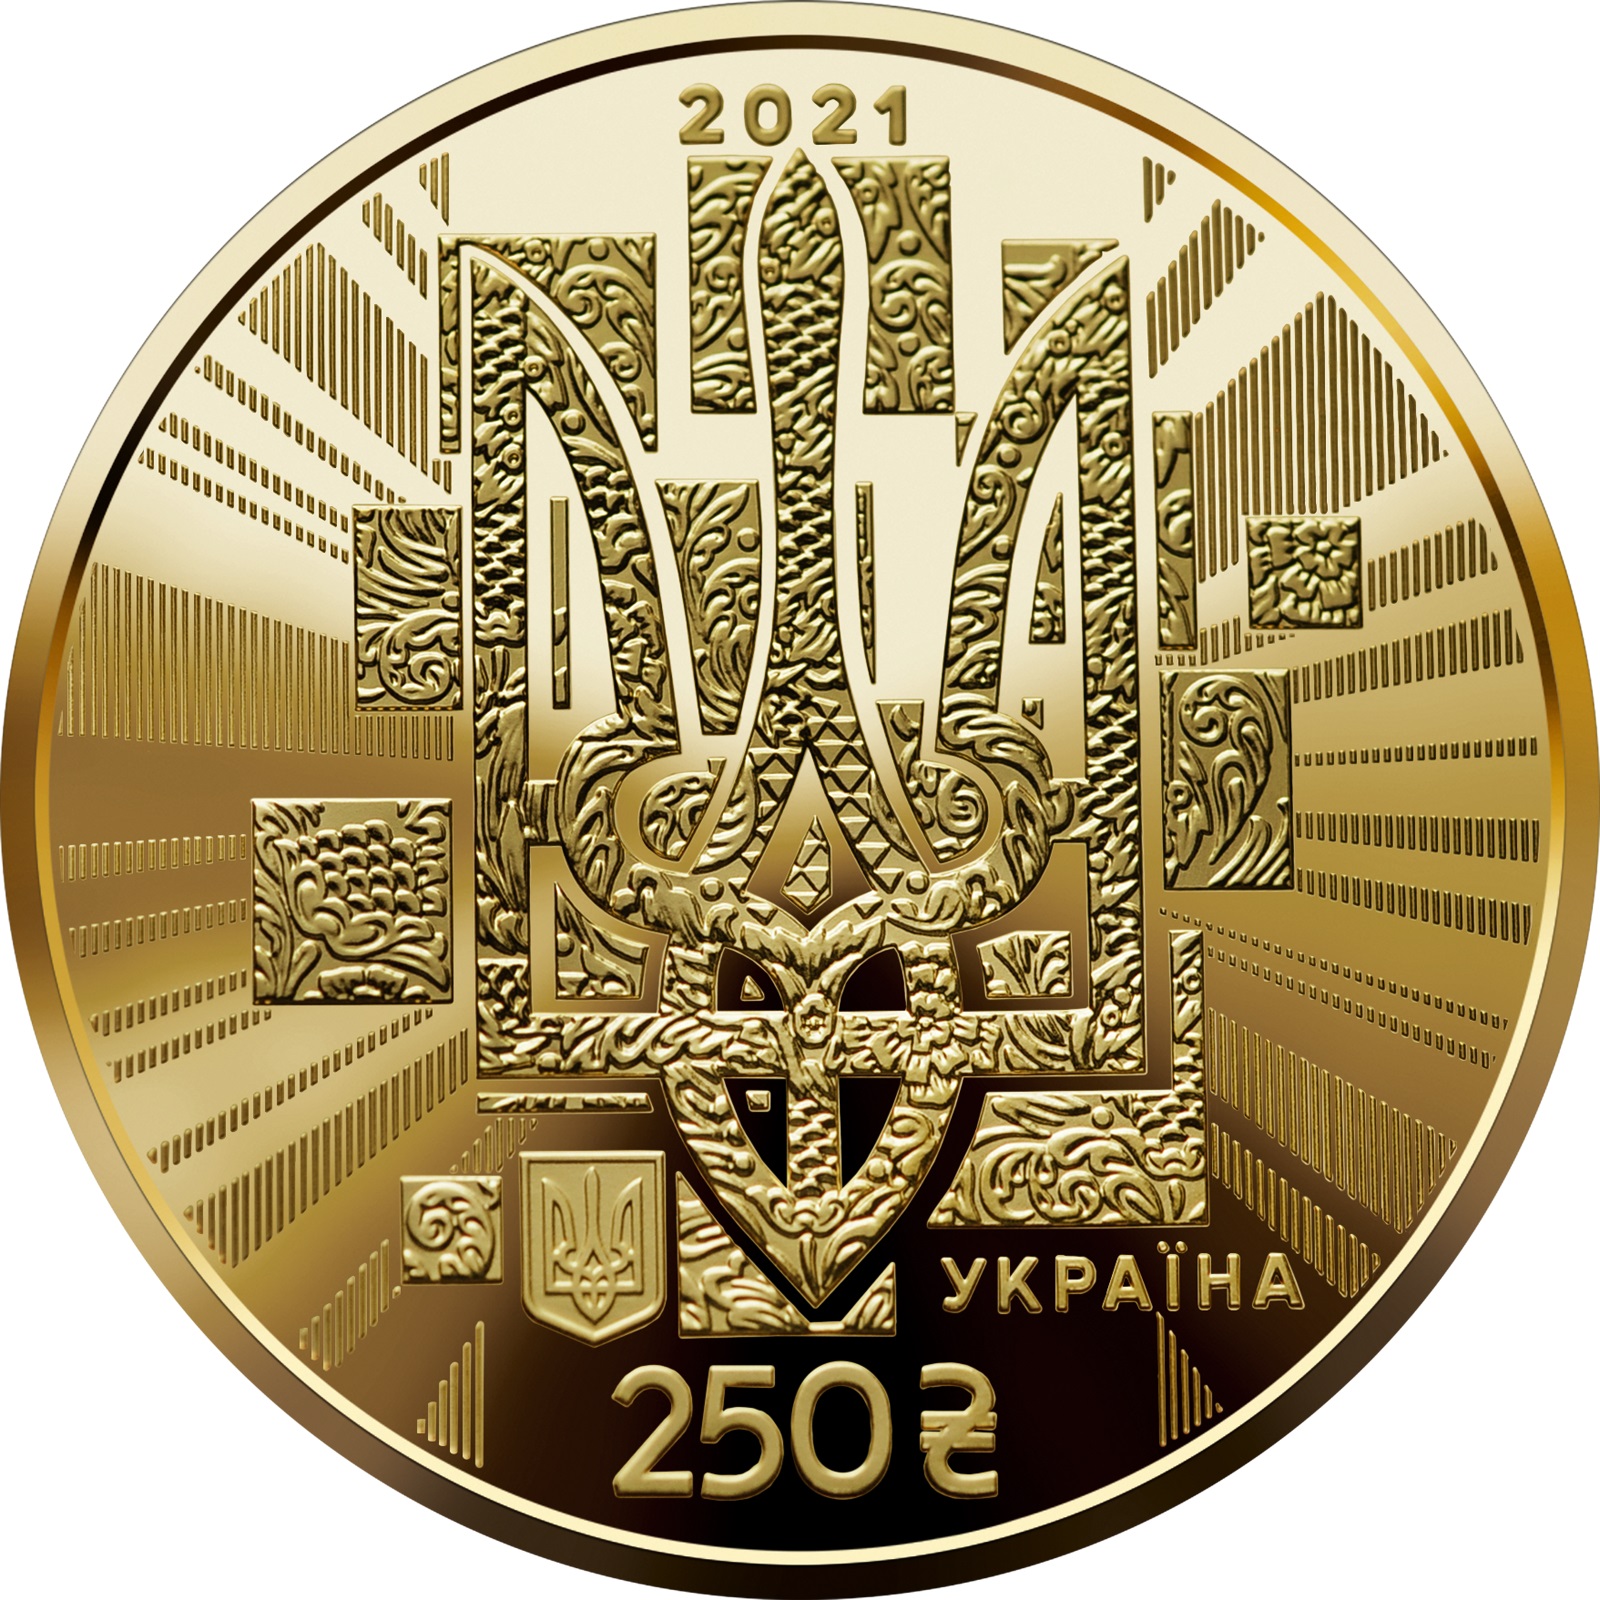 UA 250 Hryvnias 2021 National Bank of Ukraine logo